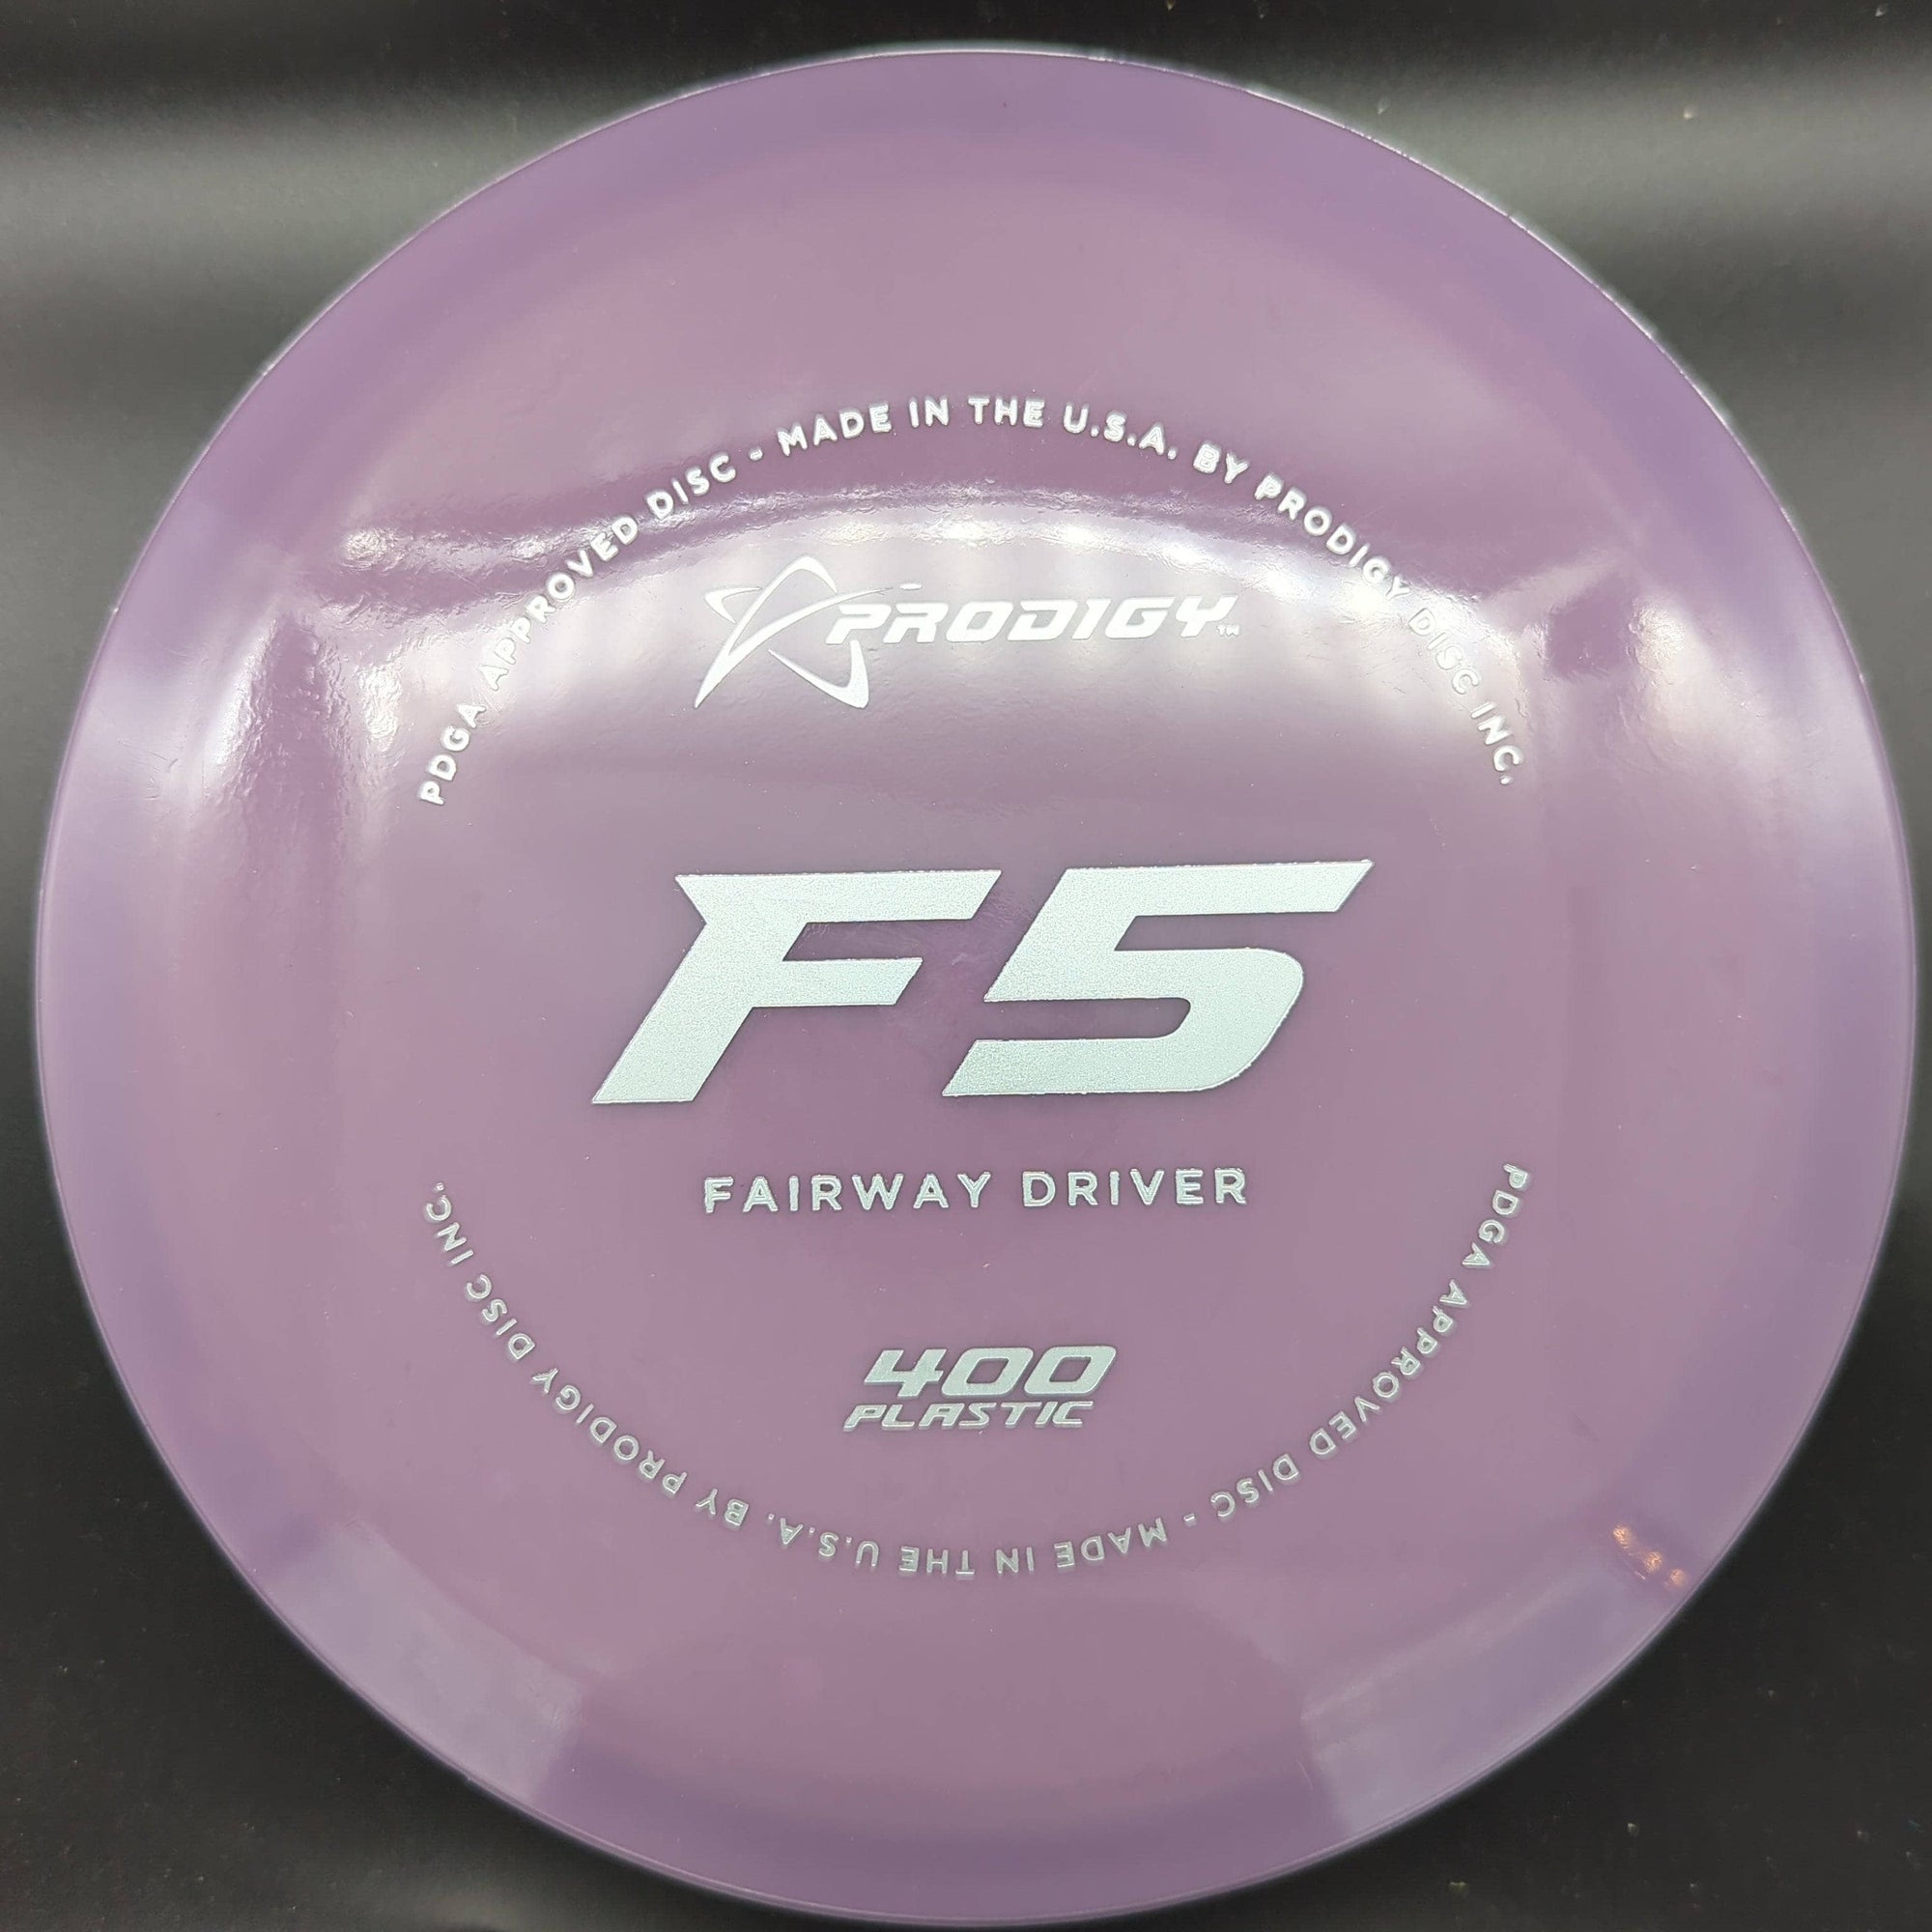 Prodigy Fairway Driver F5 - 400 plastic